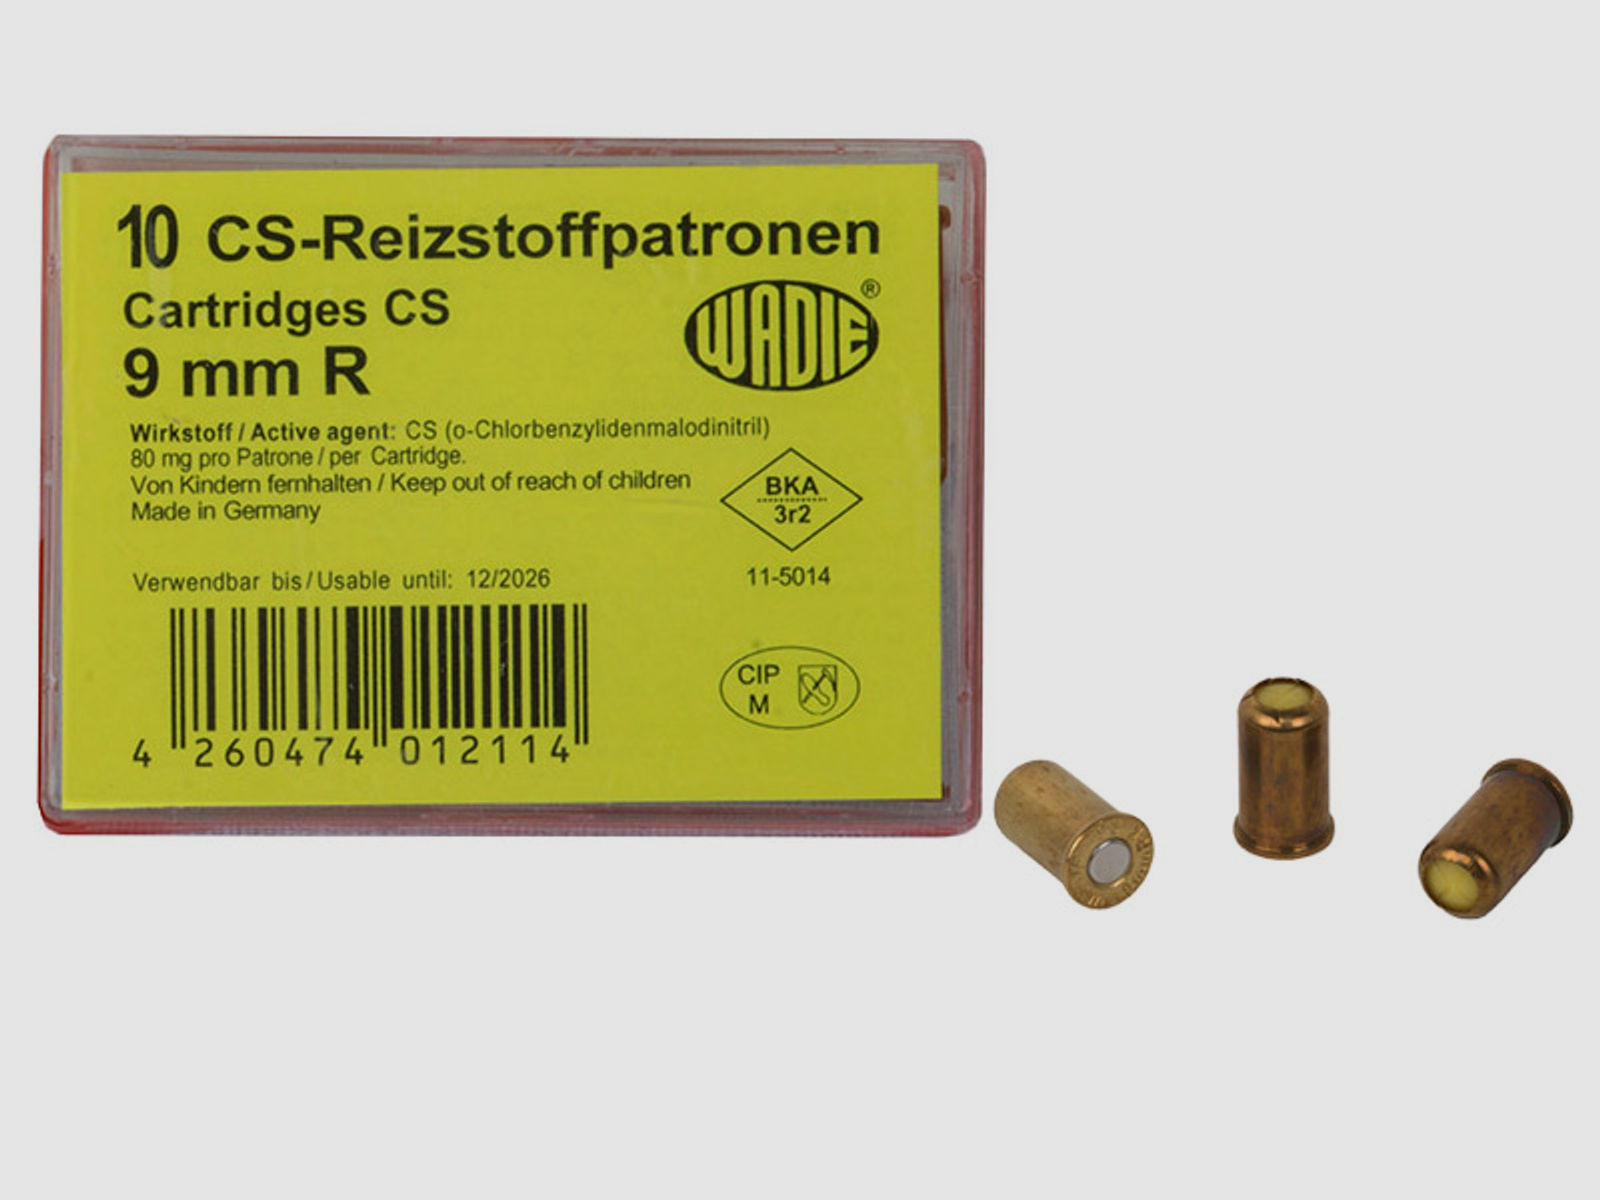 CS Gaspatronen Reizstoffpatronen Wadie Kaliber 9 mm R. fĂĽr Revolver 80 mg Wirkstoff 10 StĂĽck (P18)